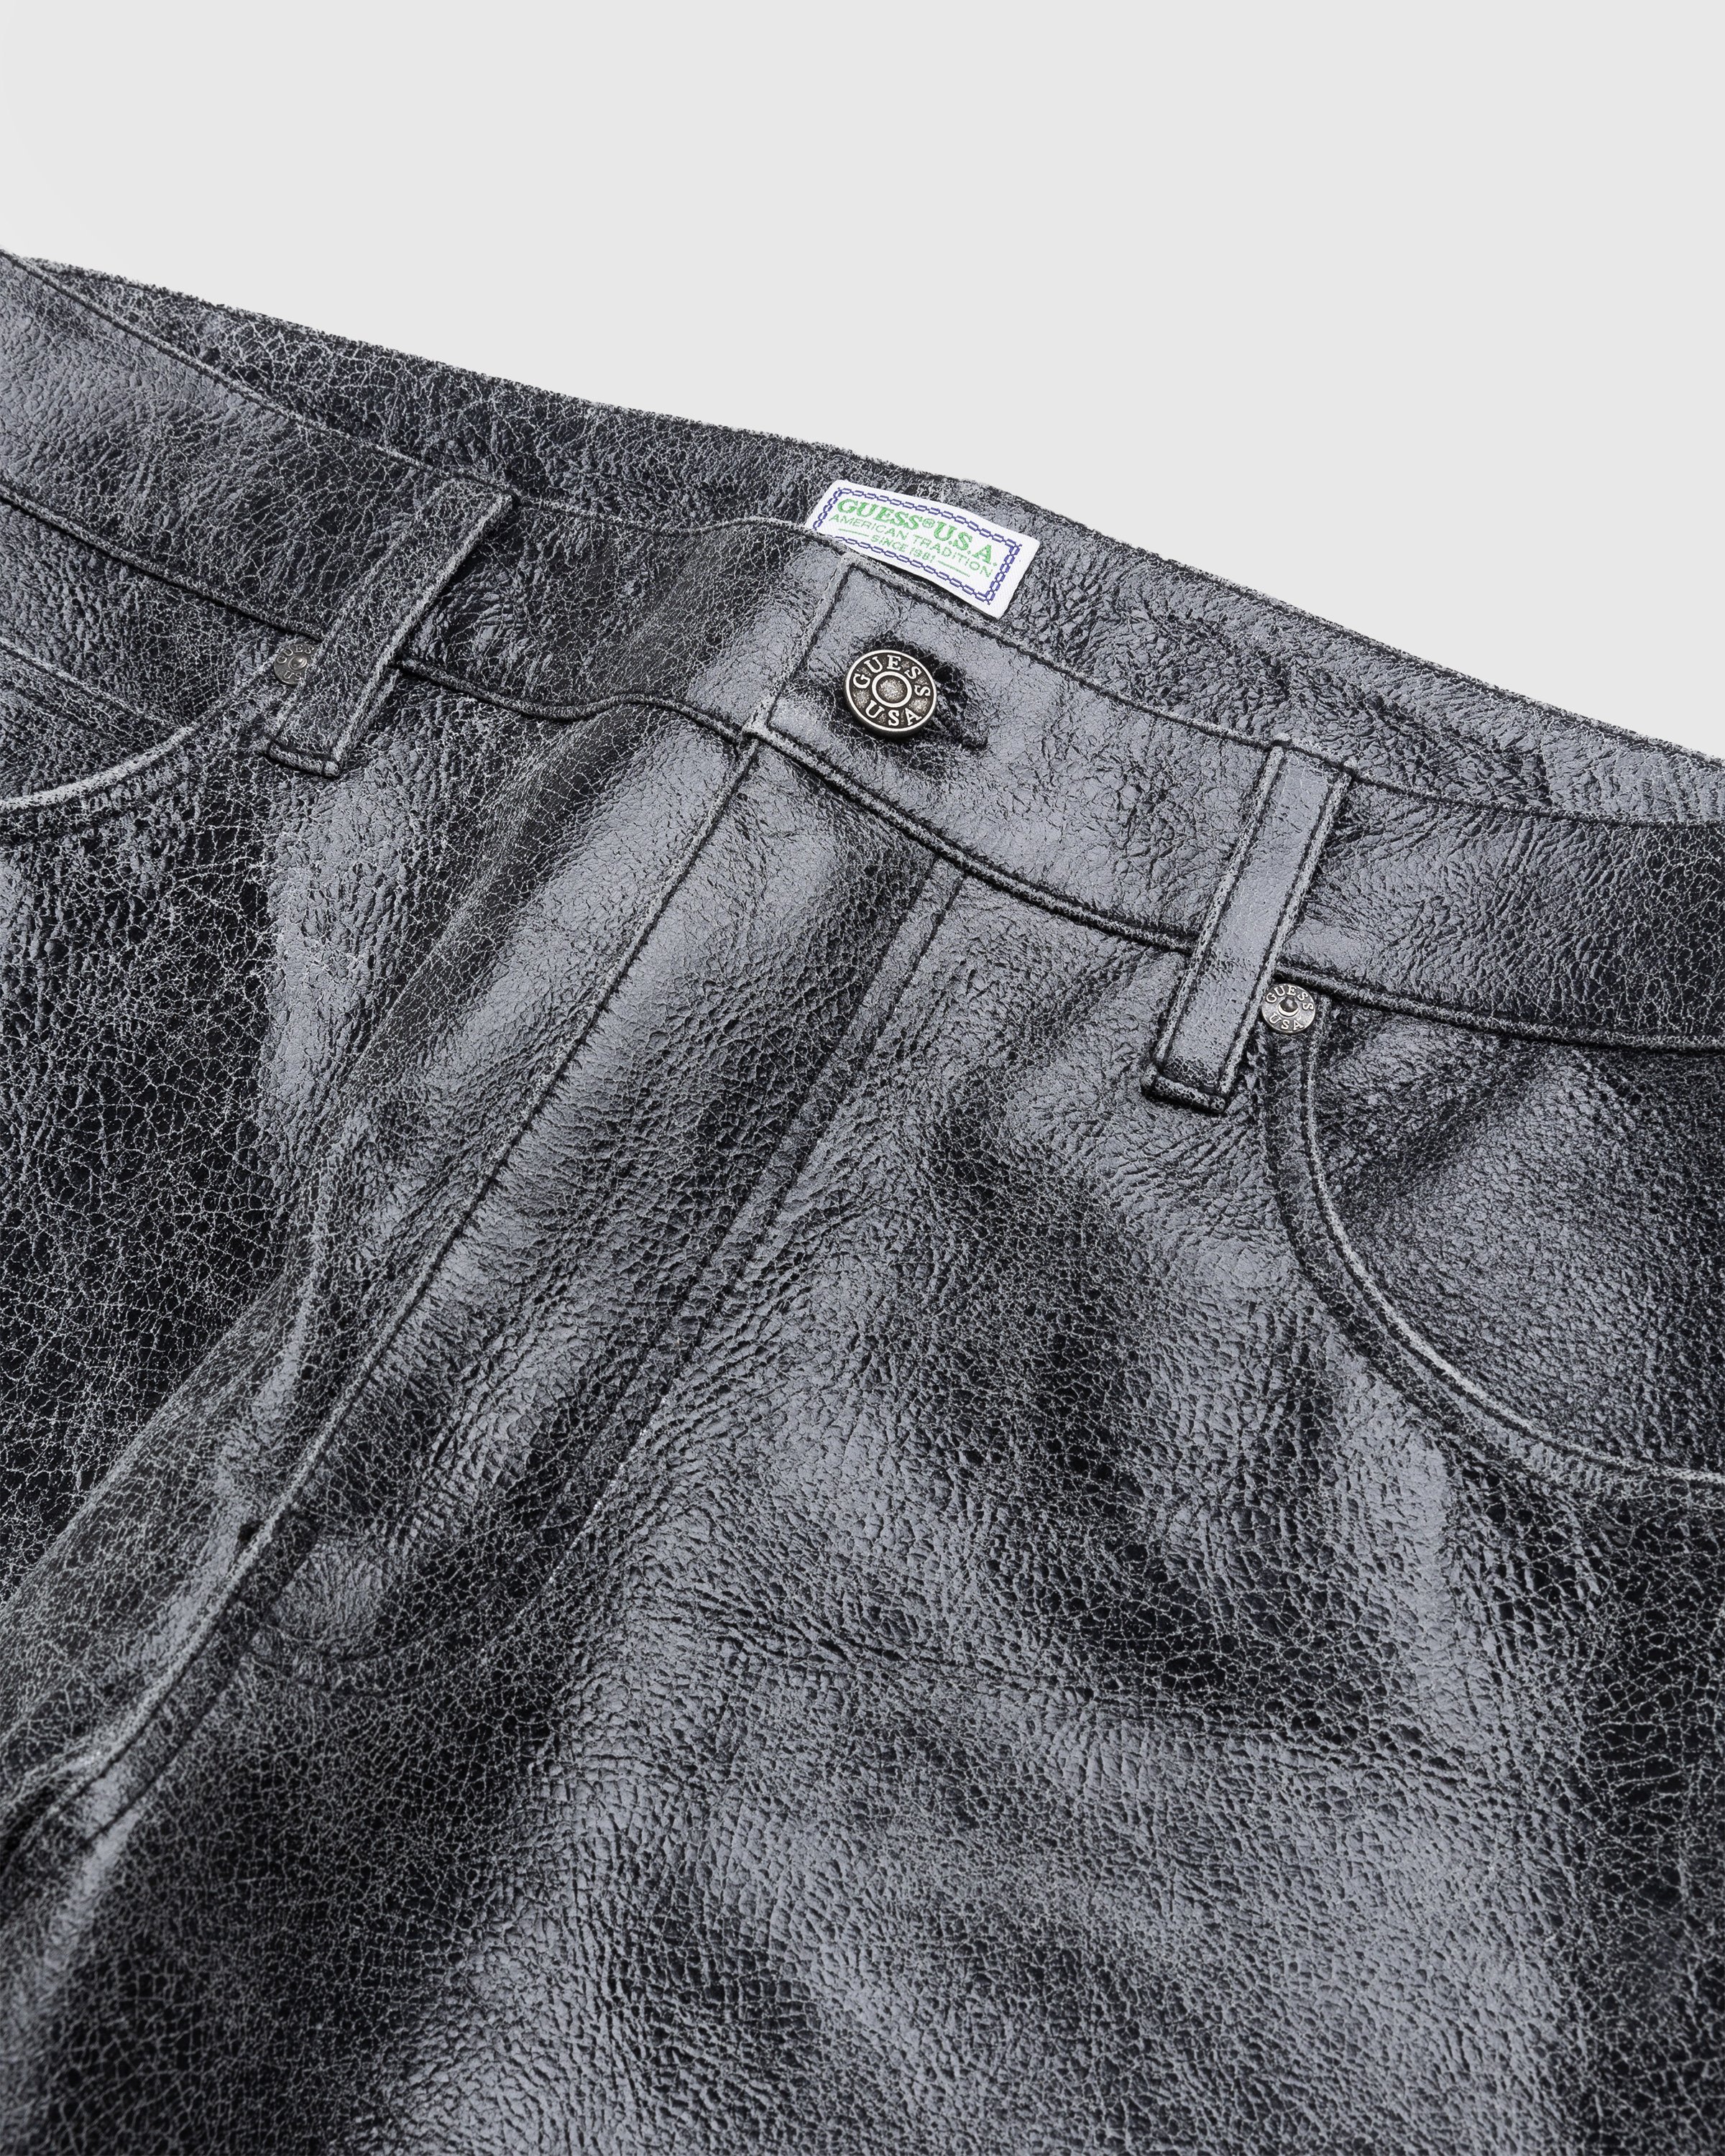 Guess USA - Crackle Leather Flare Pant Jet Black - Clothing - Black - Image 6